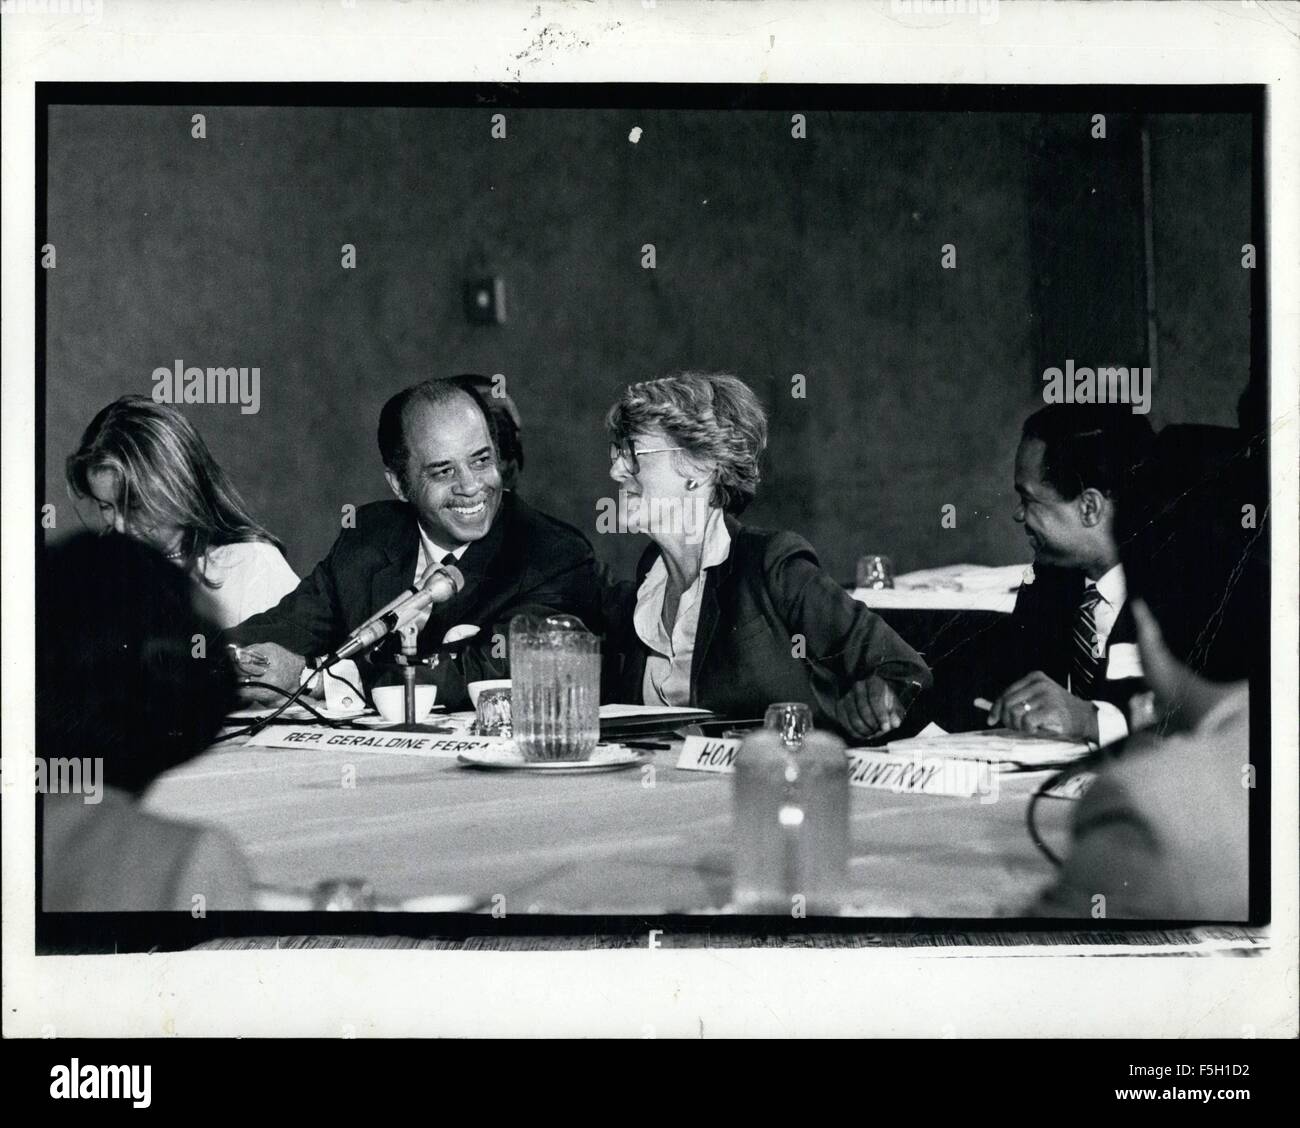 1982 - Geraldine Ferraro © Keystone Pictures USA/ZUMAPRESS.com/Alamy Live News Stock Photo